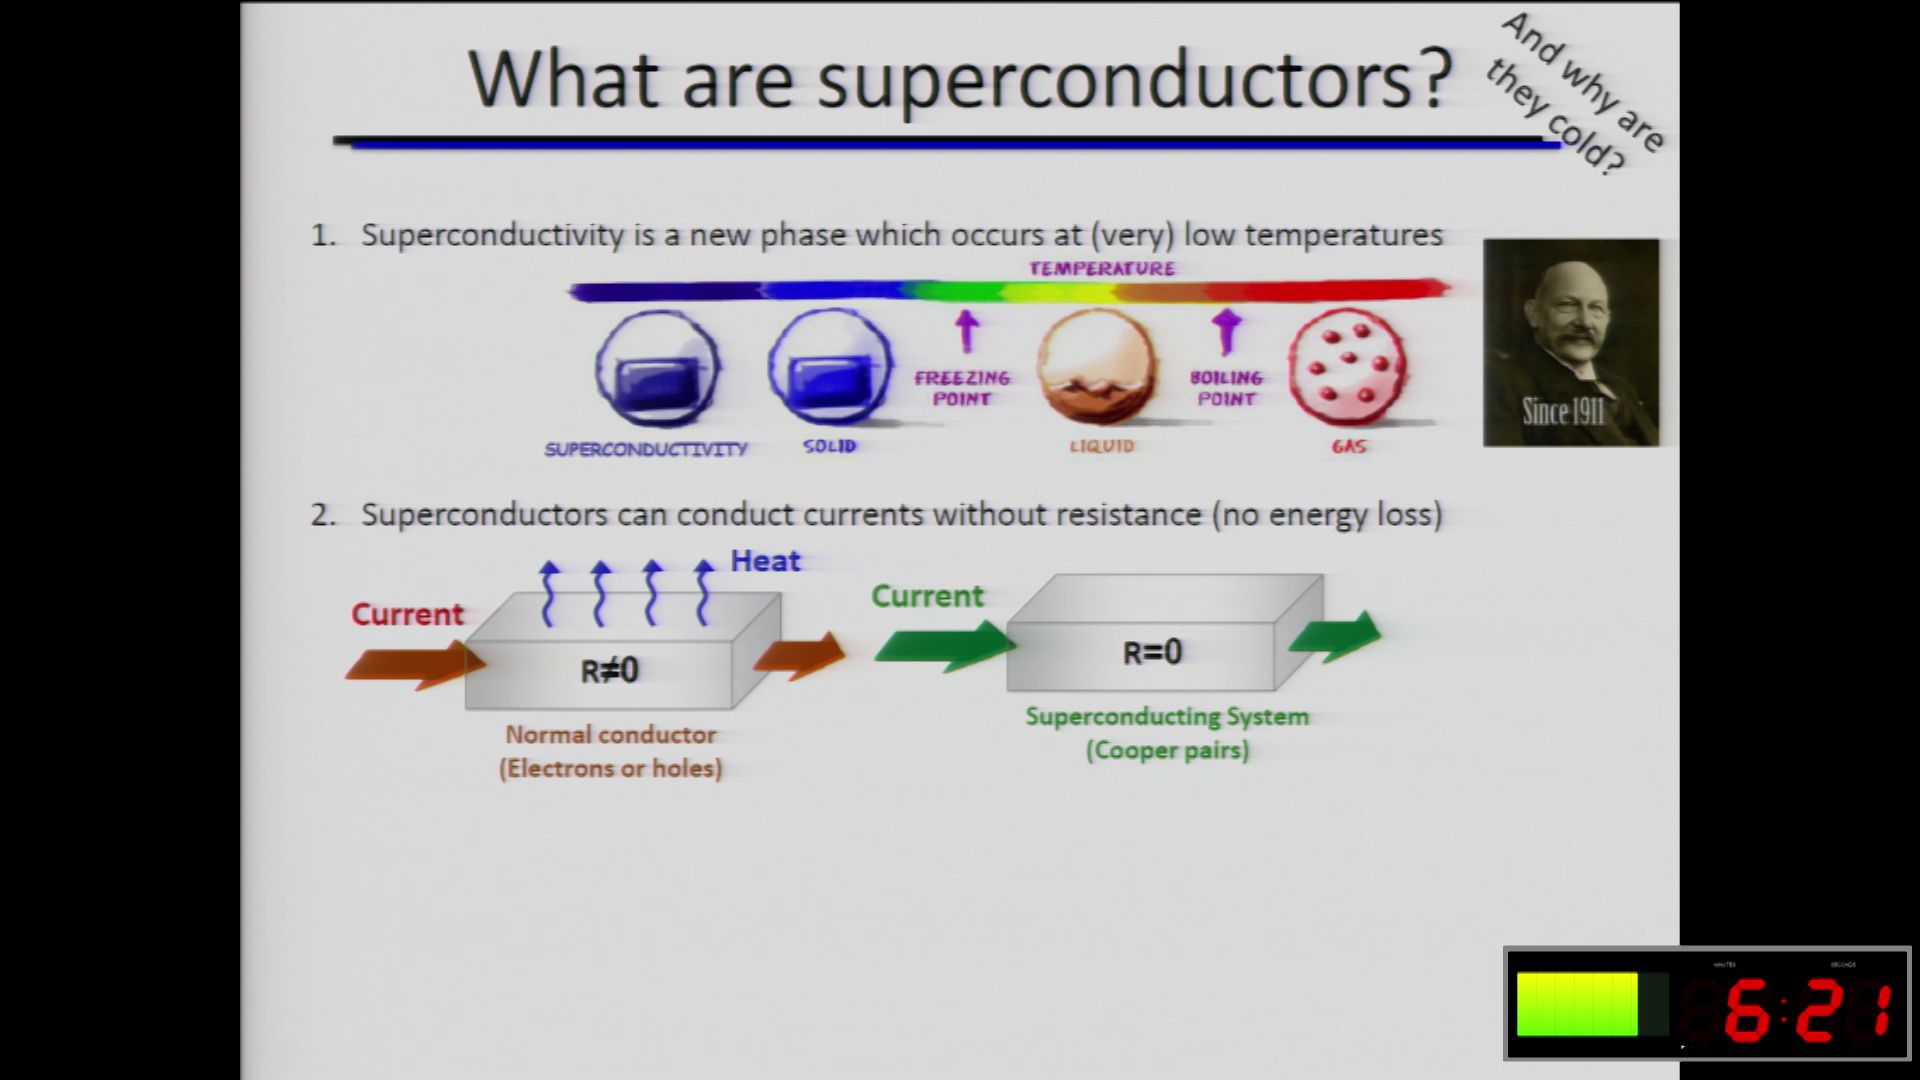 Hot future for cold superconductors